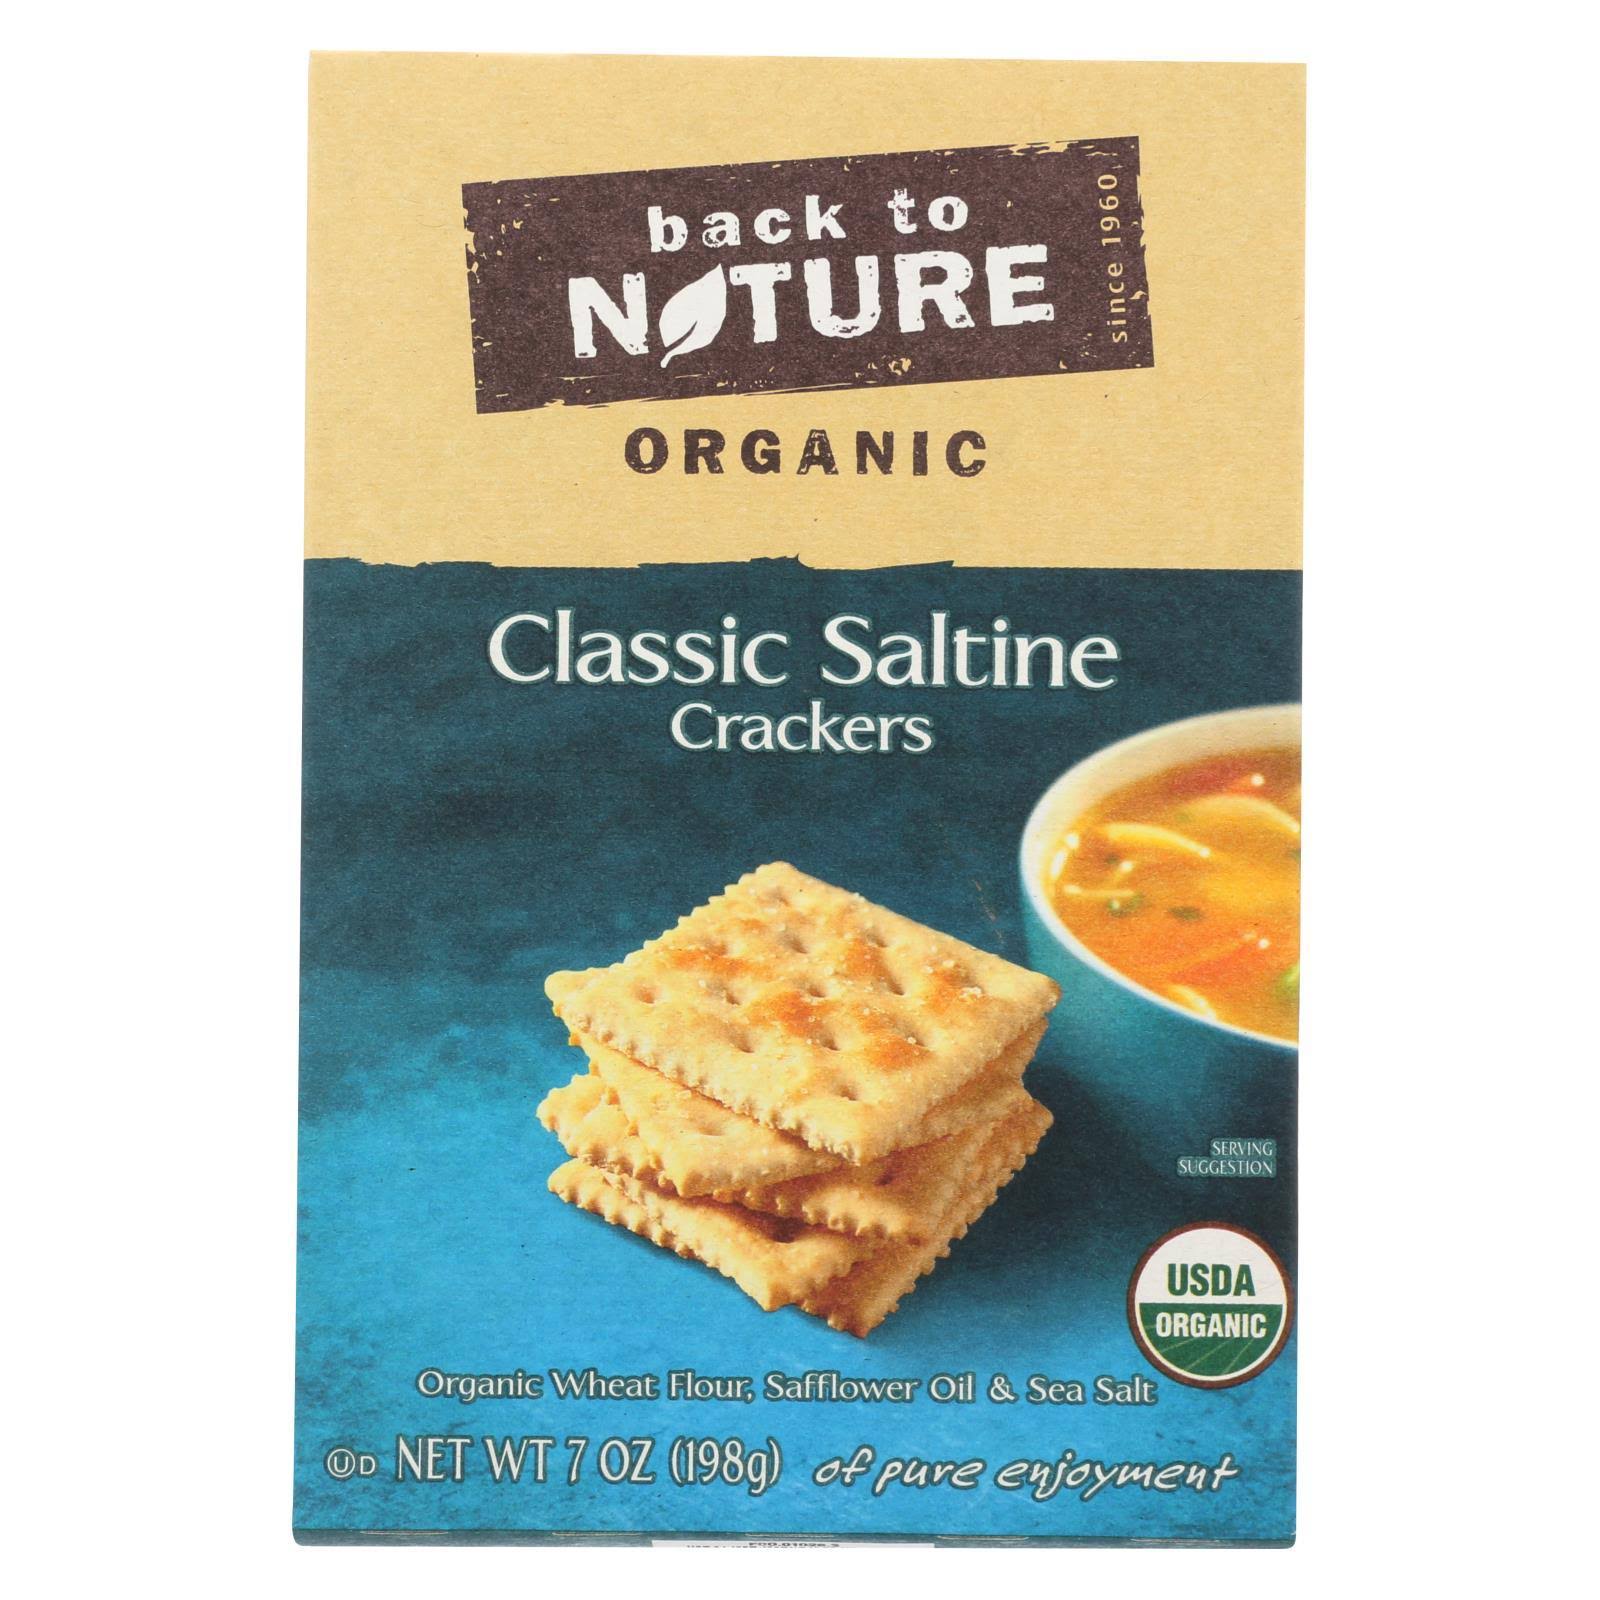 Back to Nature Organic Classic Saltine Crackers - 7 oz